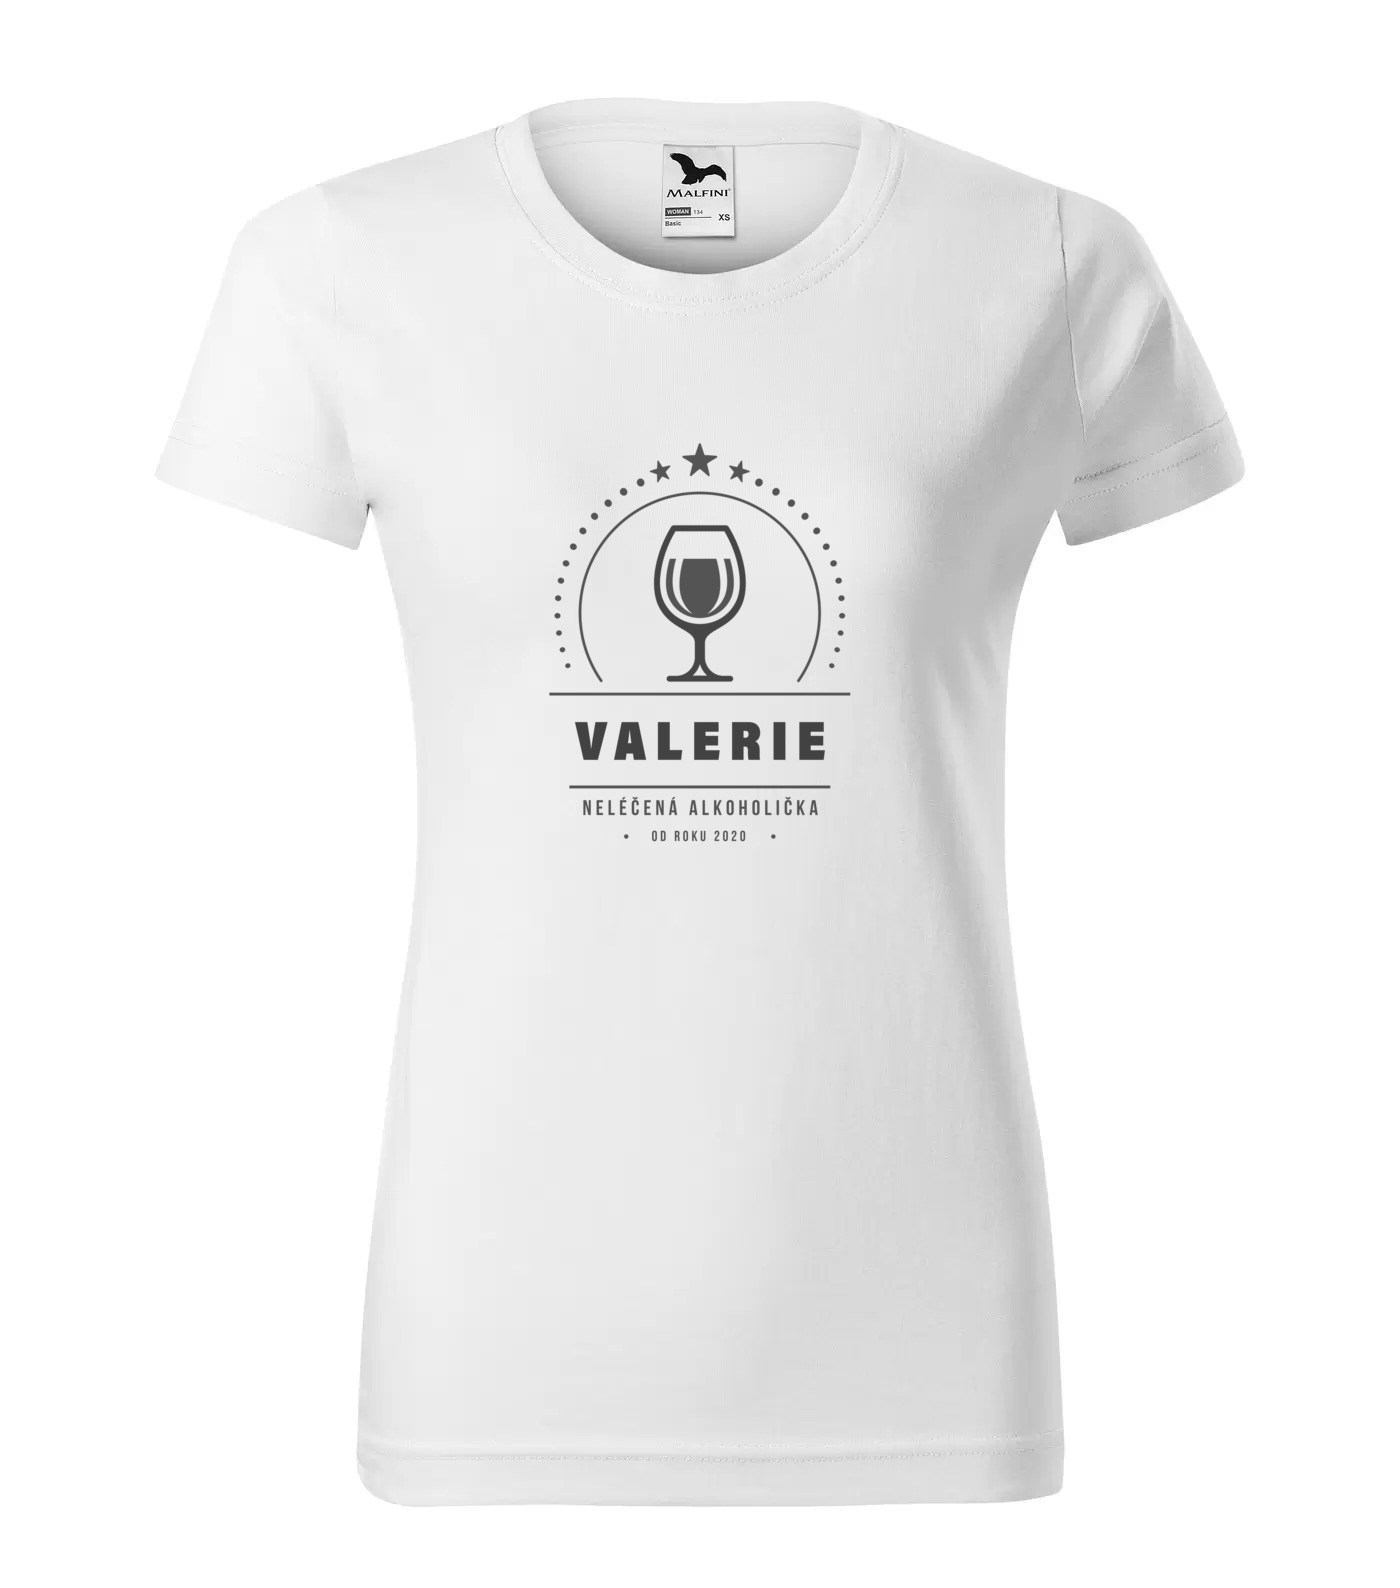 Tričko Alkoholička Valerie